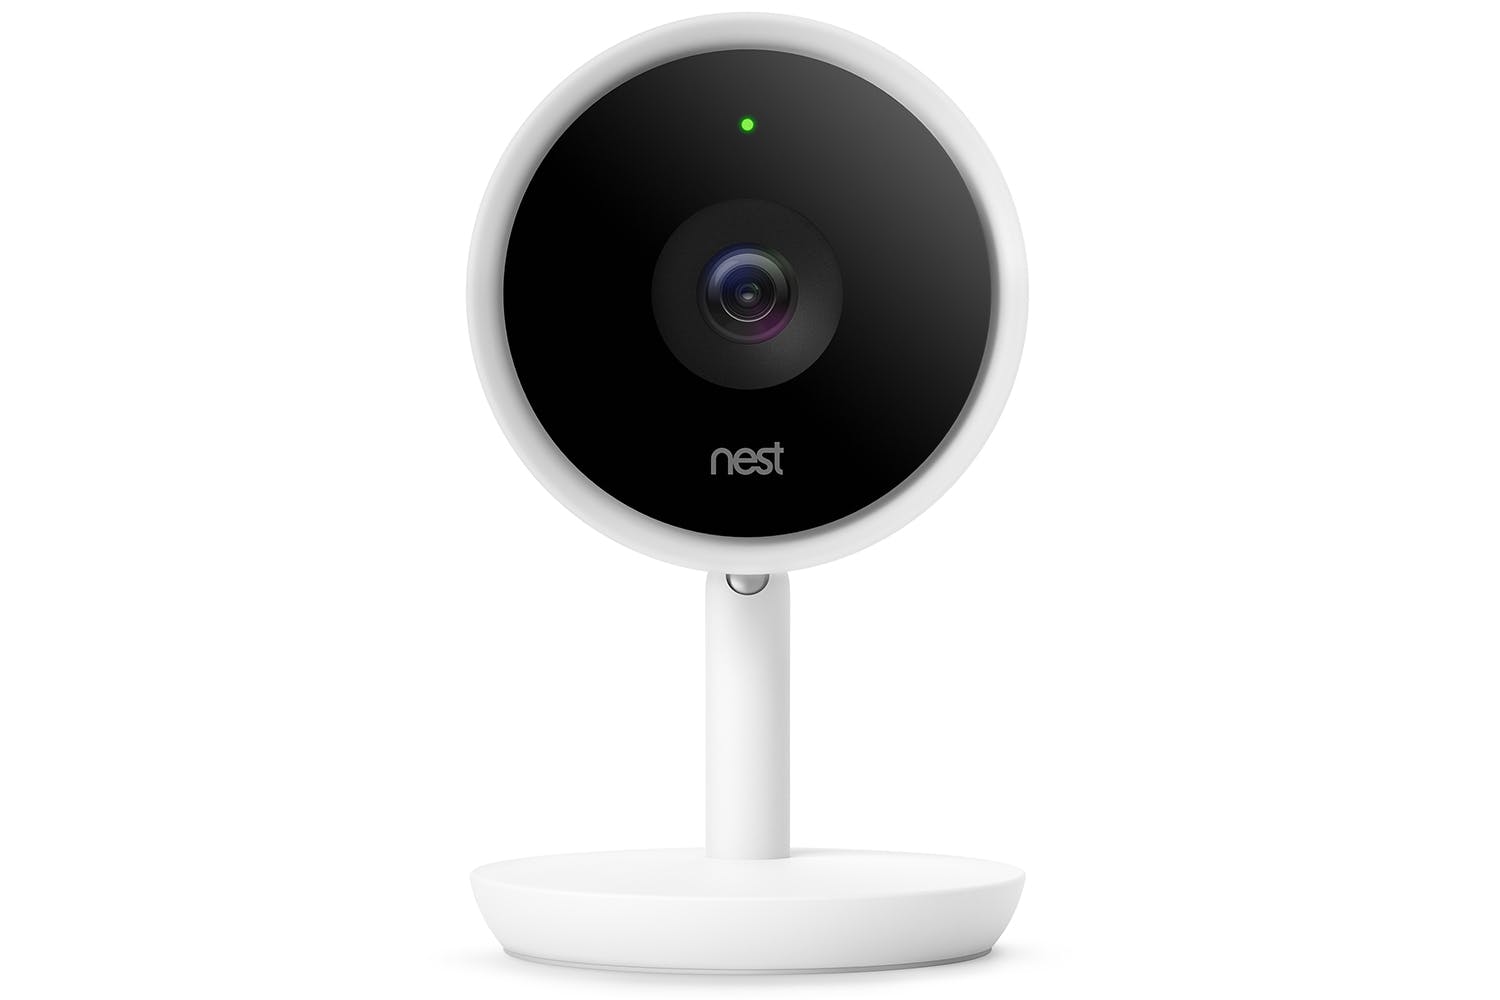 add nest camera to account